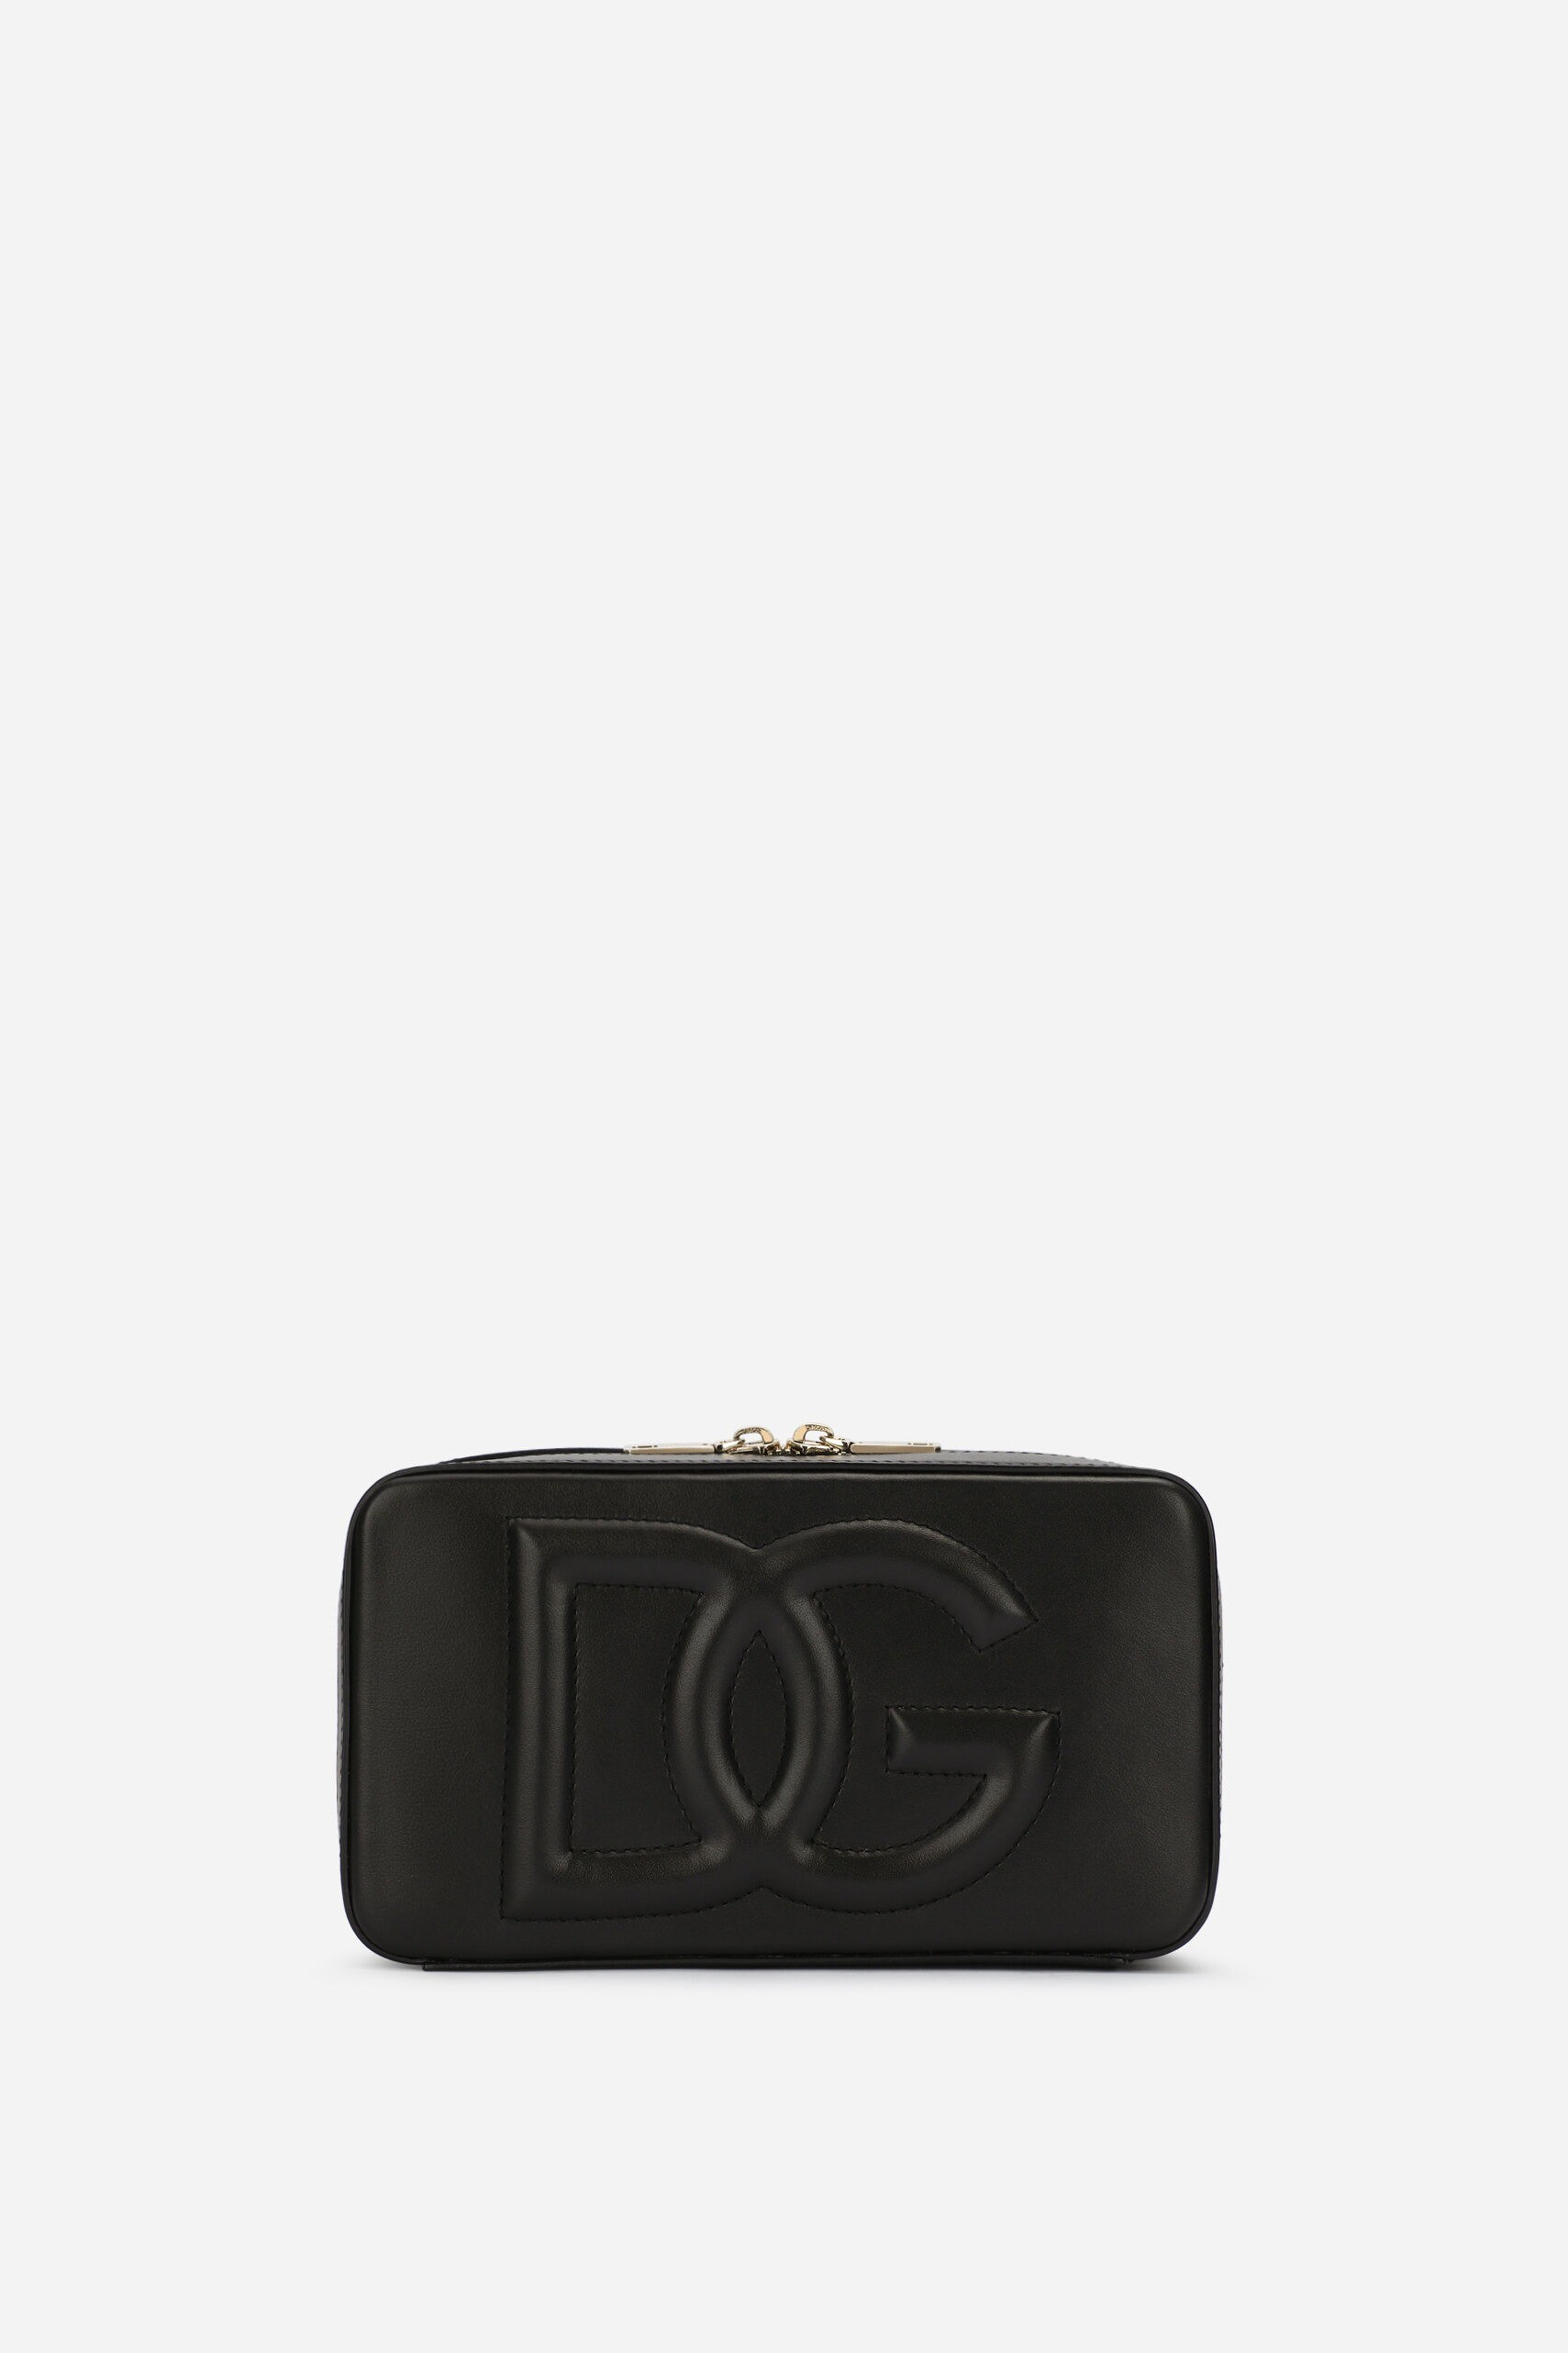 Dolce & Gabbana - SMALL CALFSKIN DG LOGO CAMERA BAG - Black